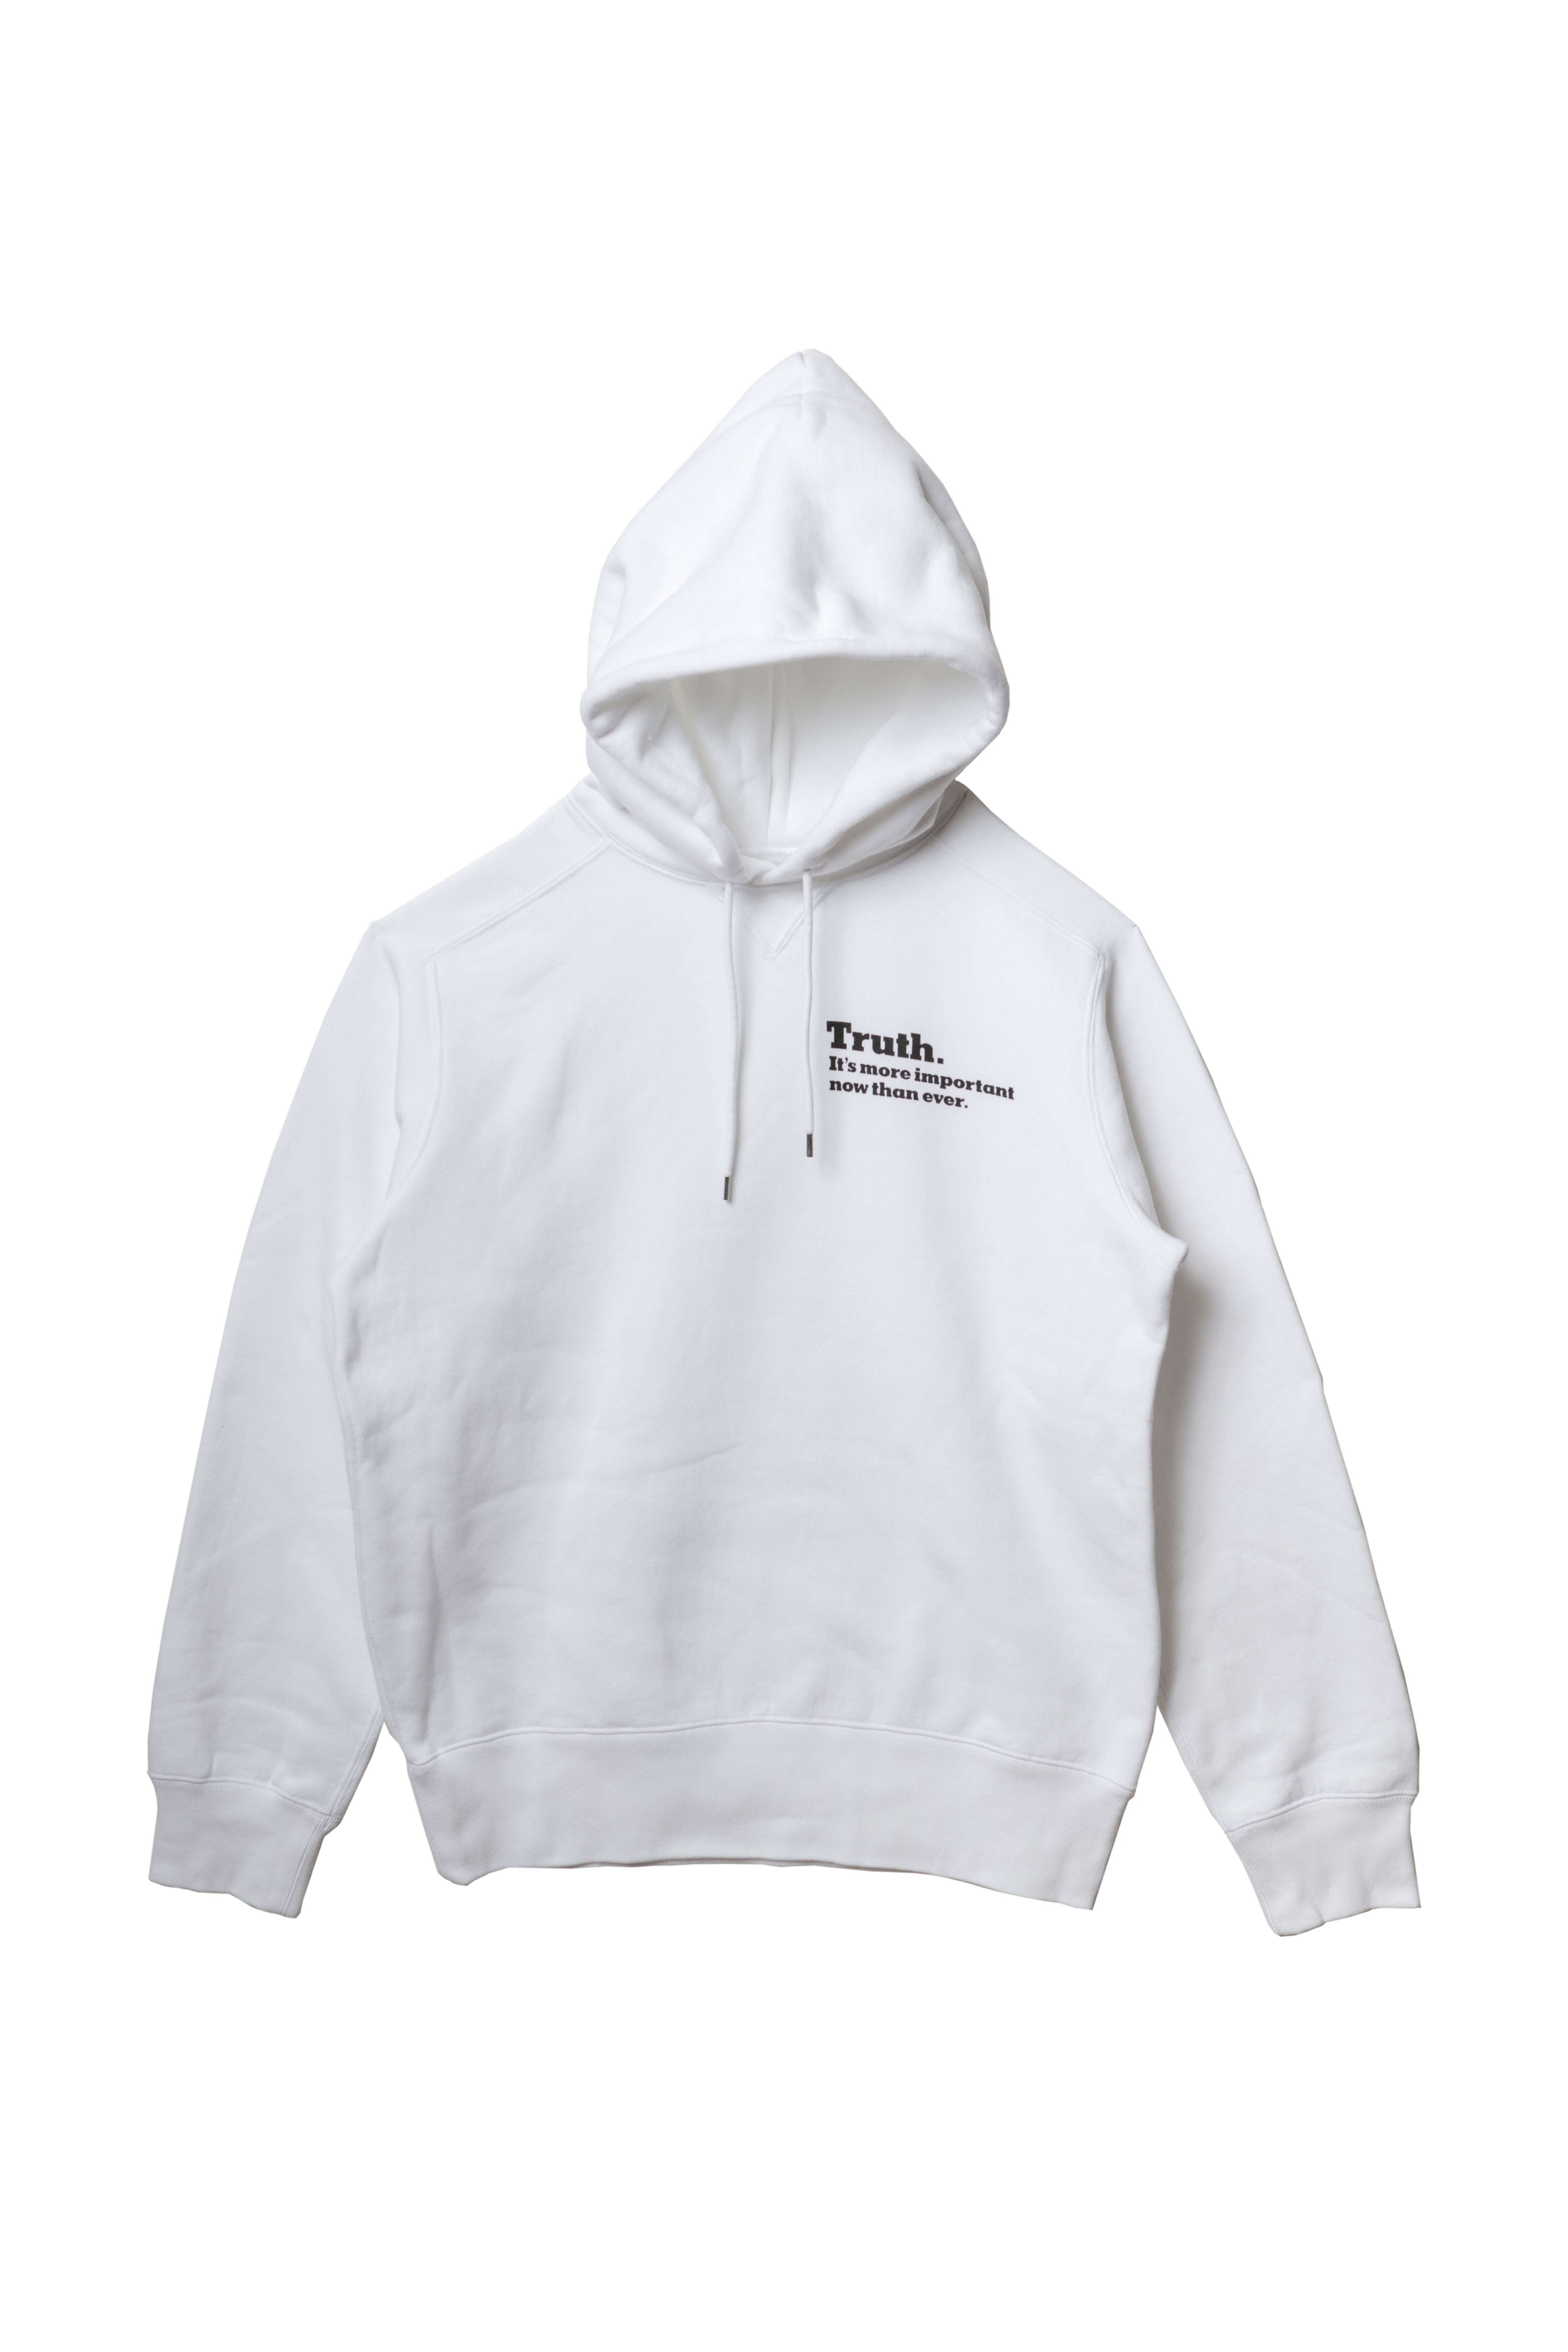 sacai-fw-2018-nyt-white-front-hoodie